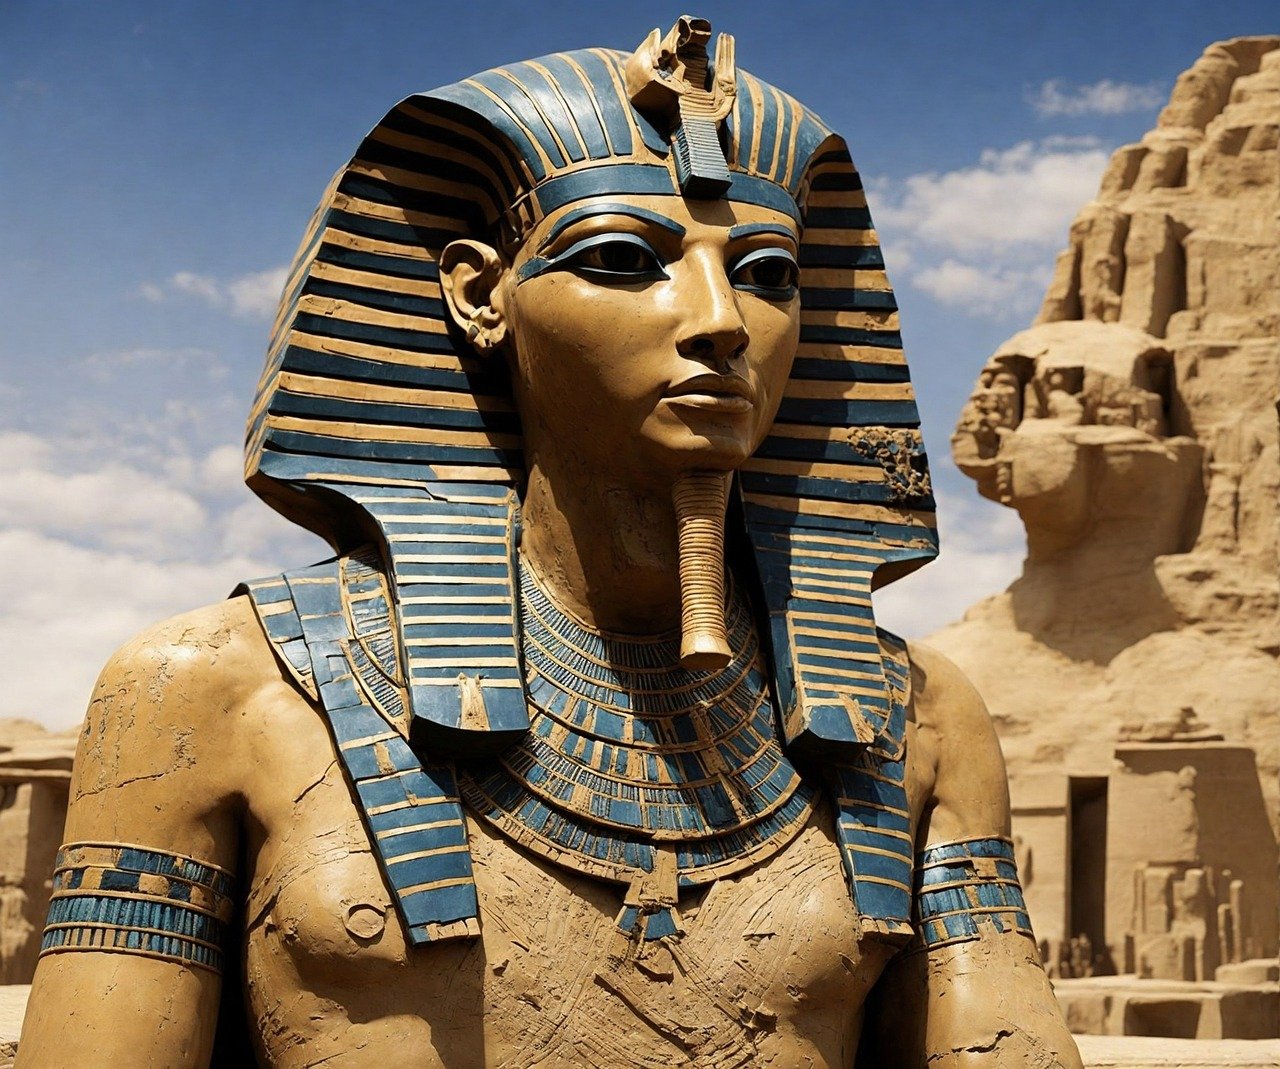 a statue of the Pharoah wearing an Egyptian headdress